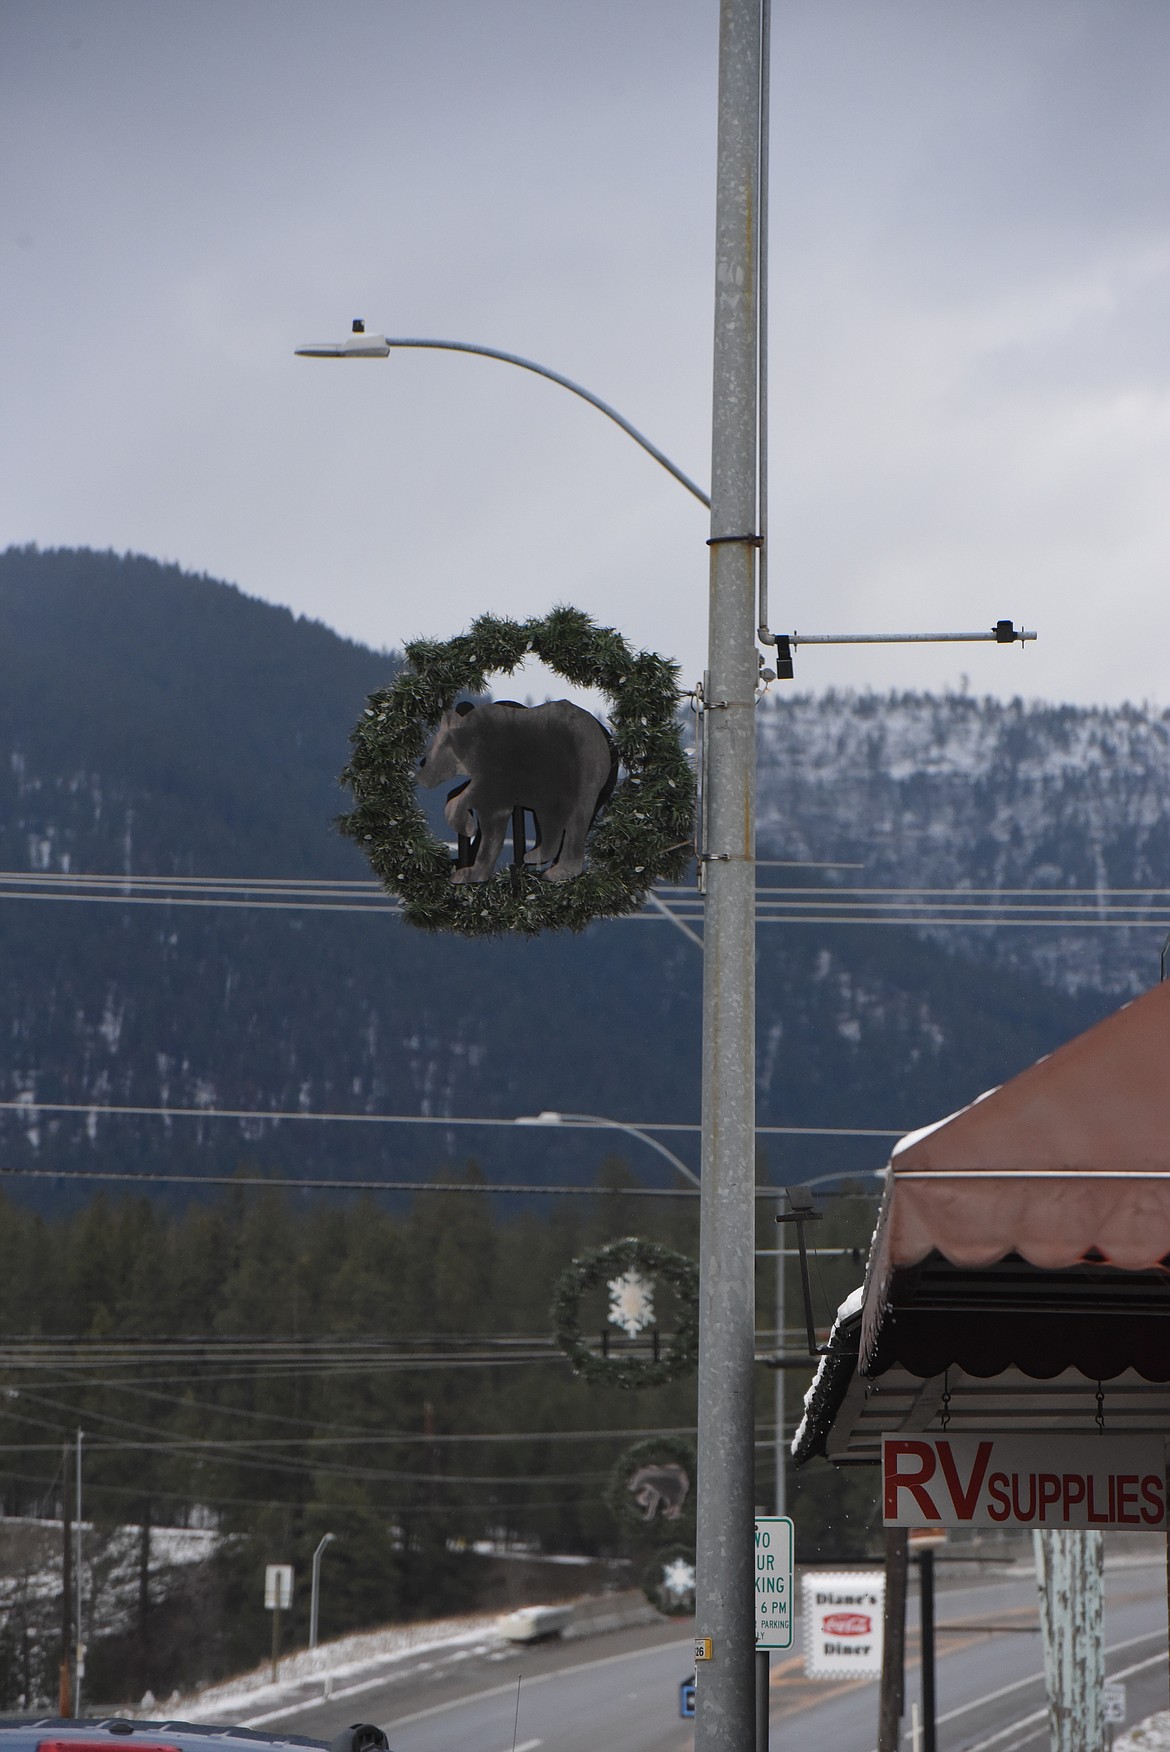 Holiday wreaths line the light poles along California Avenue. (Derrick Perkins/The Western News)